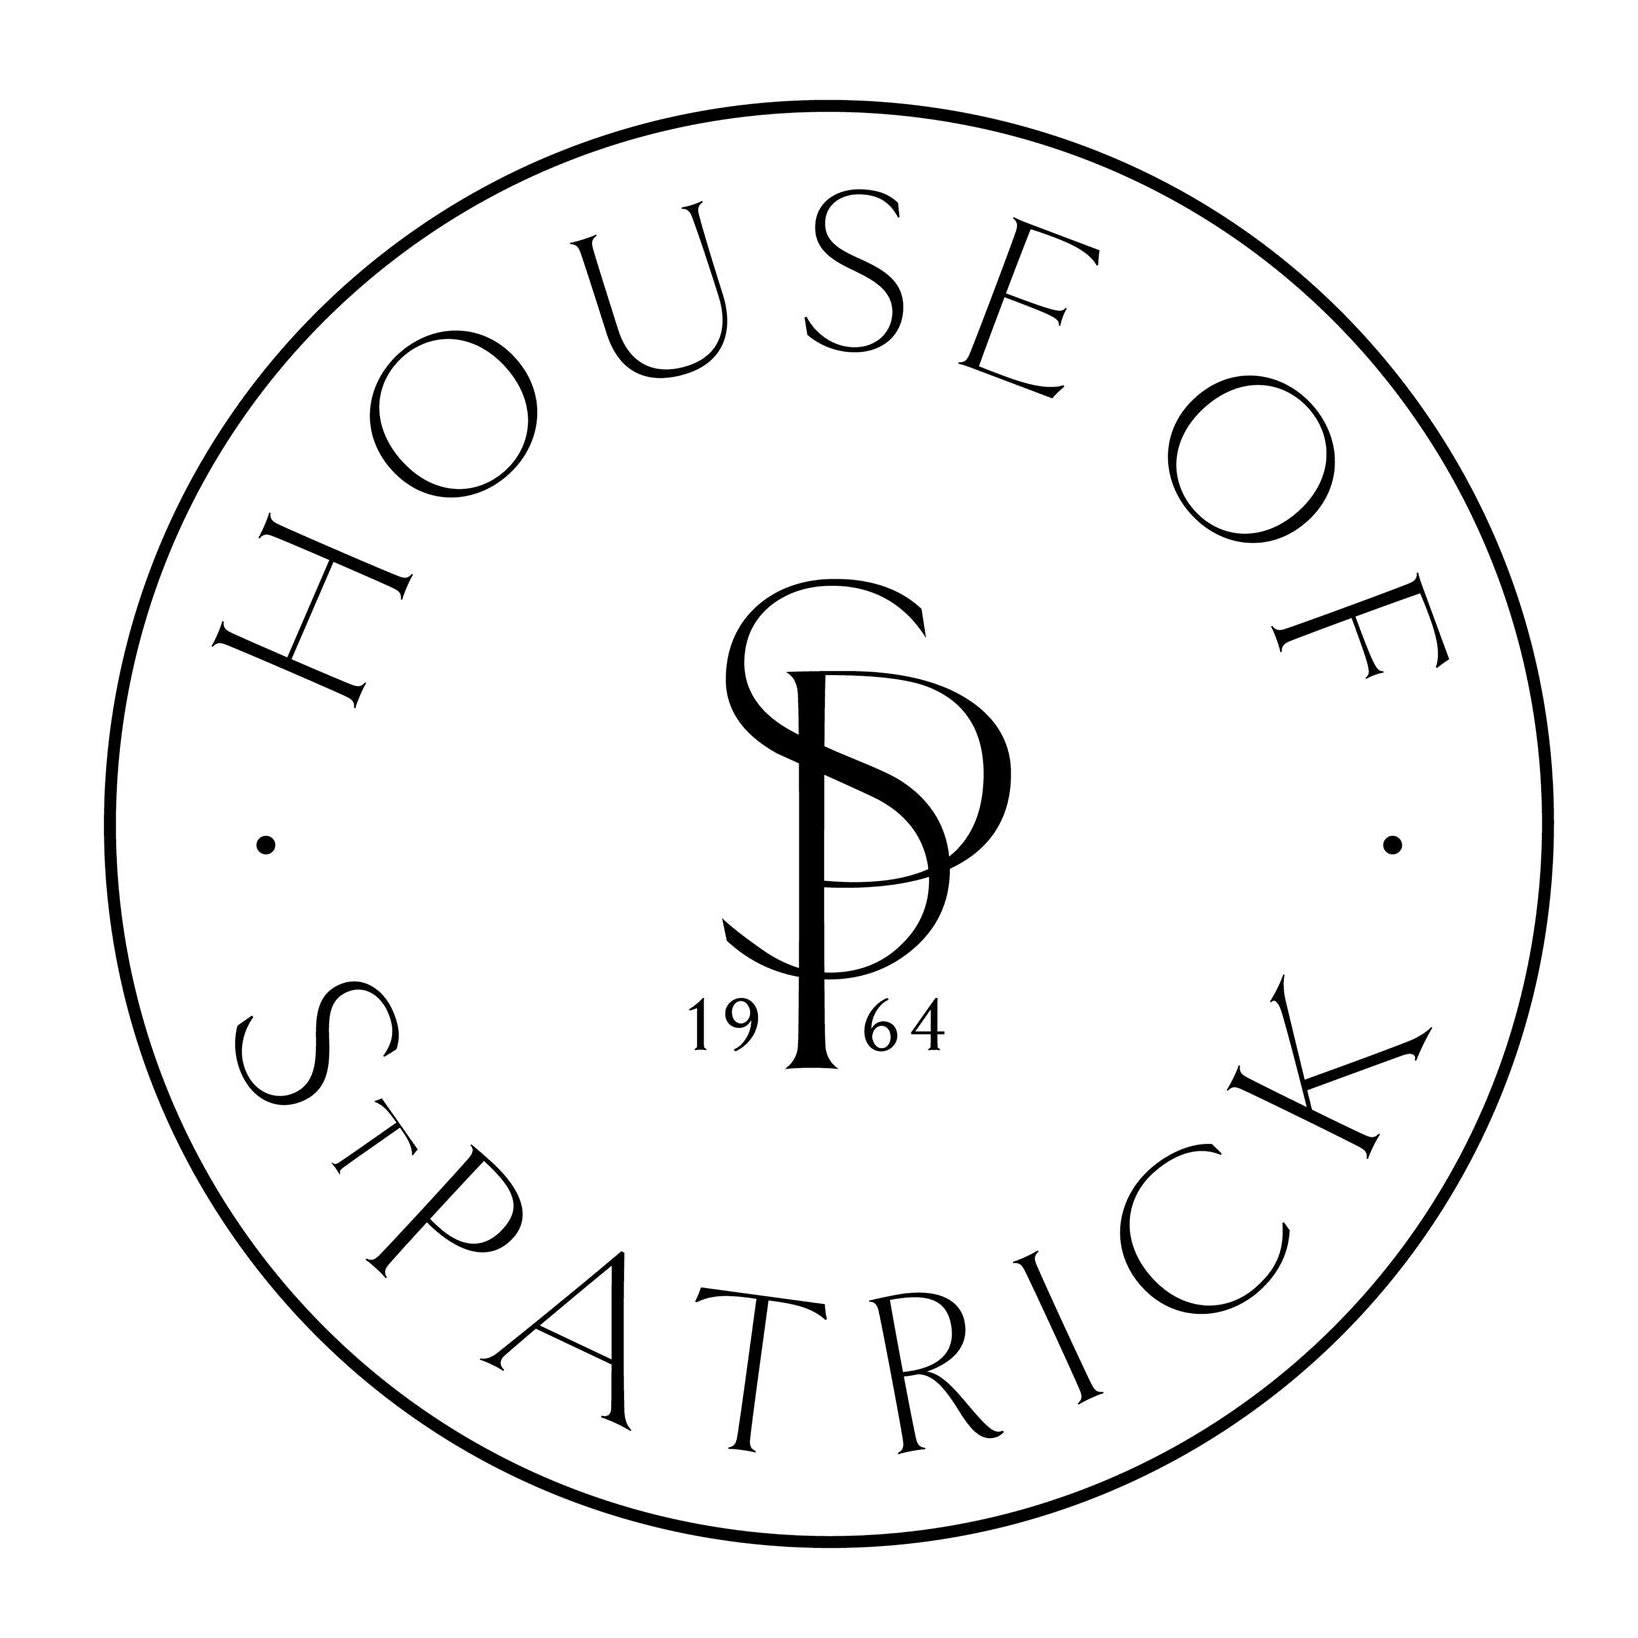 House of St. Patrick